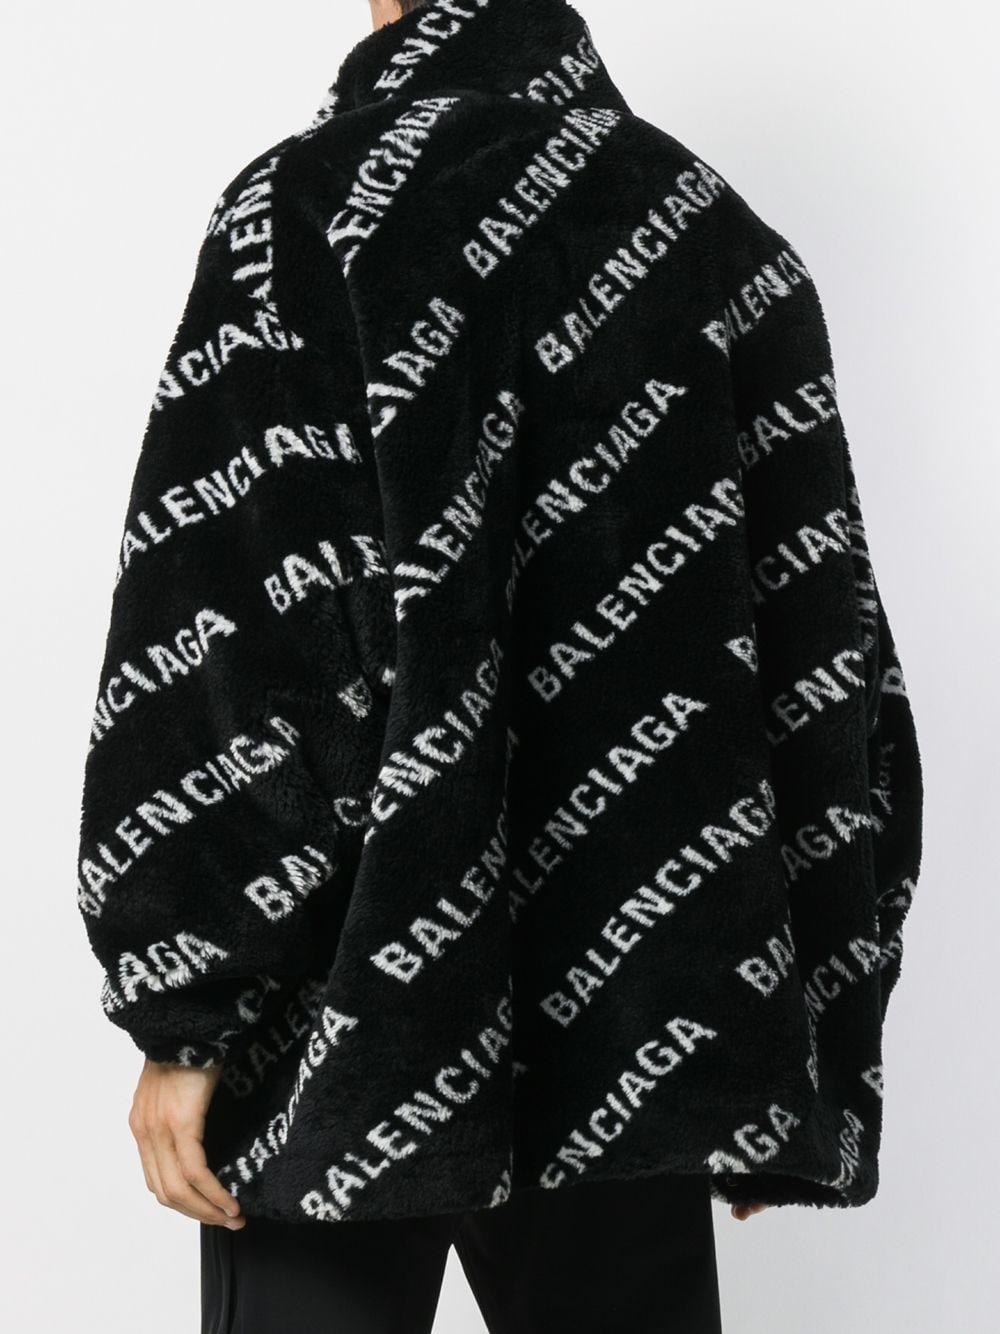 Balenciaga Fluffy Zip-up Jacket in Black for Men - Lyst